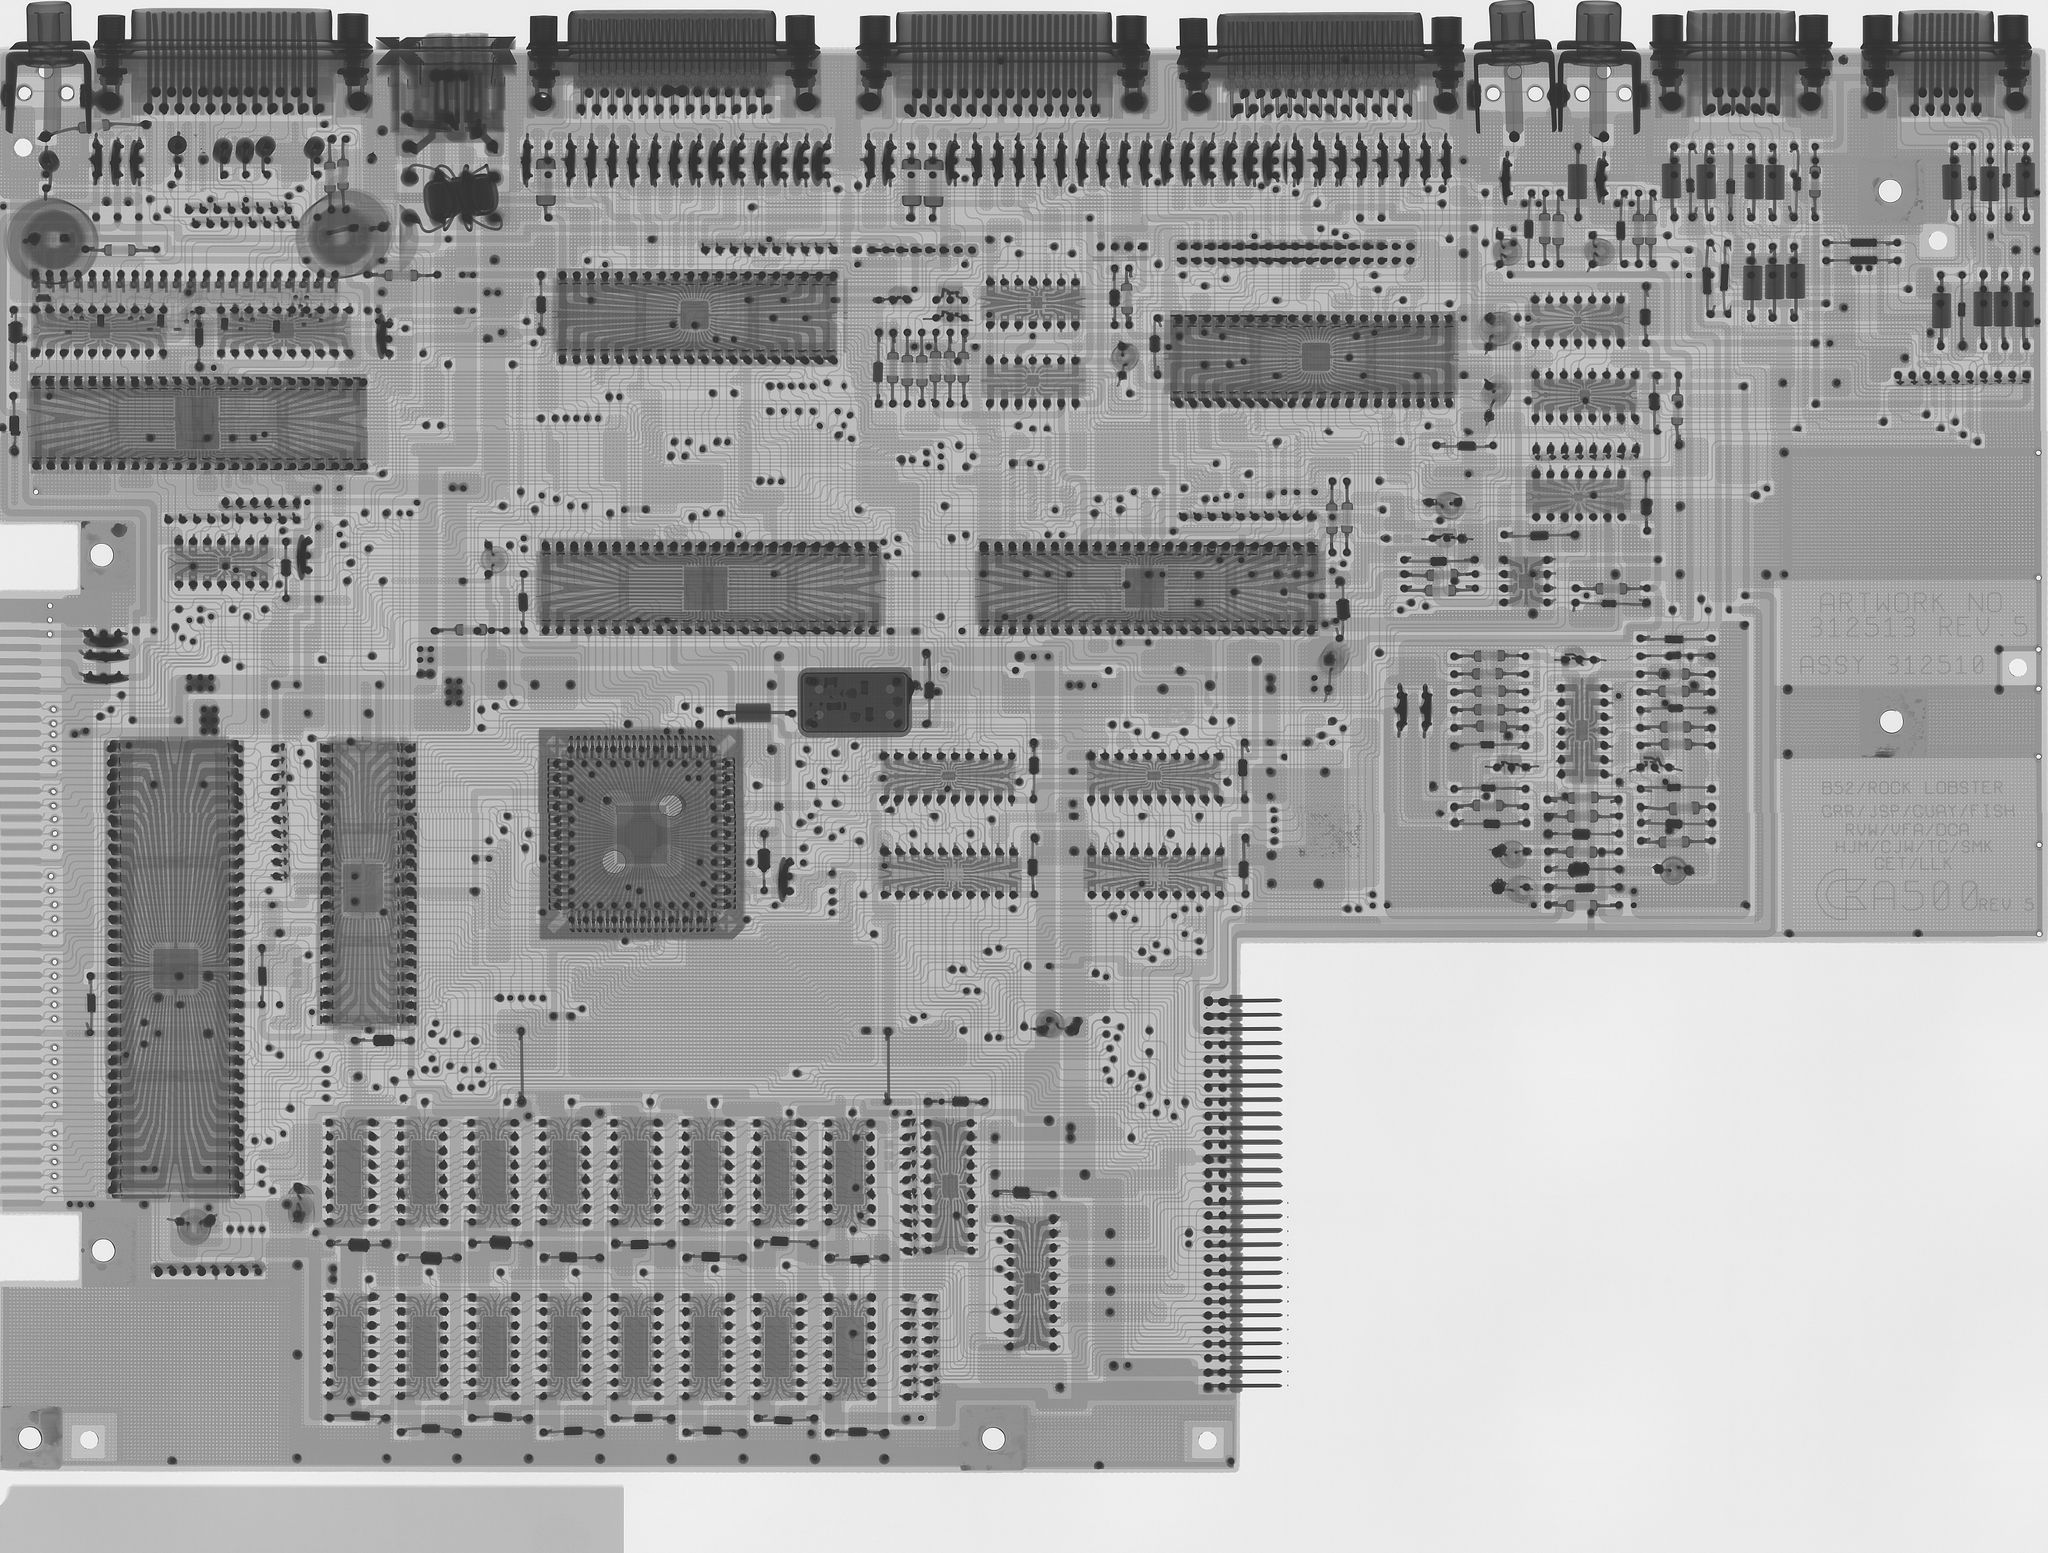 https://www.retro32.com/wp-content/uploads/2021/12/Amiga-500-xray-motherboard.jpg